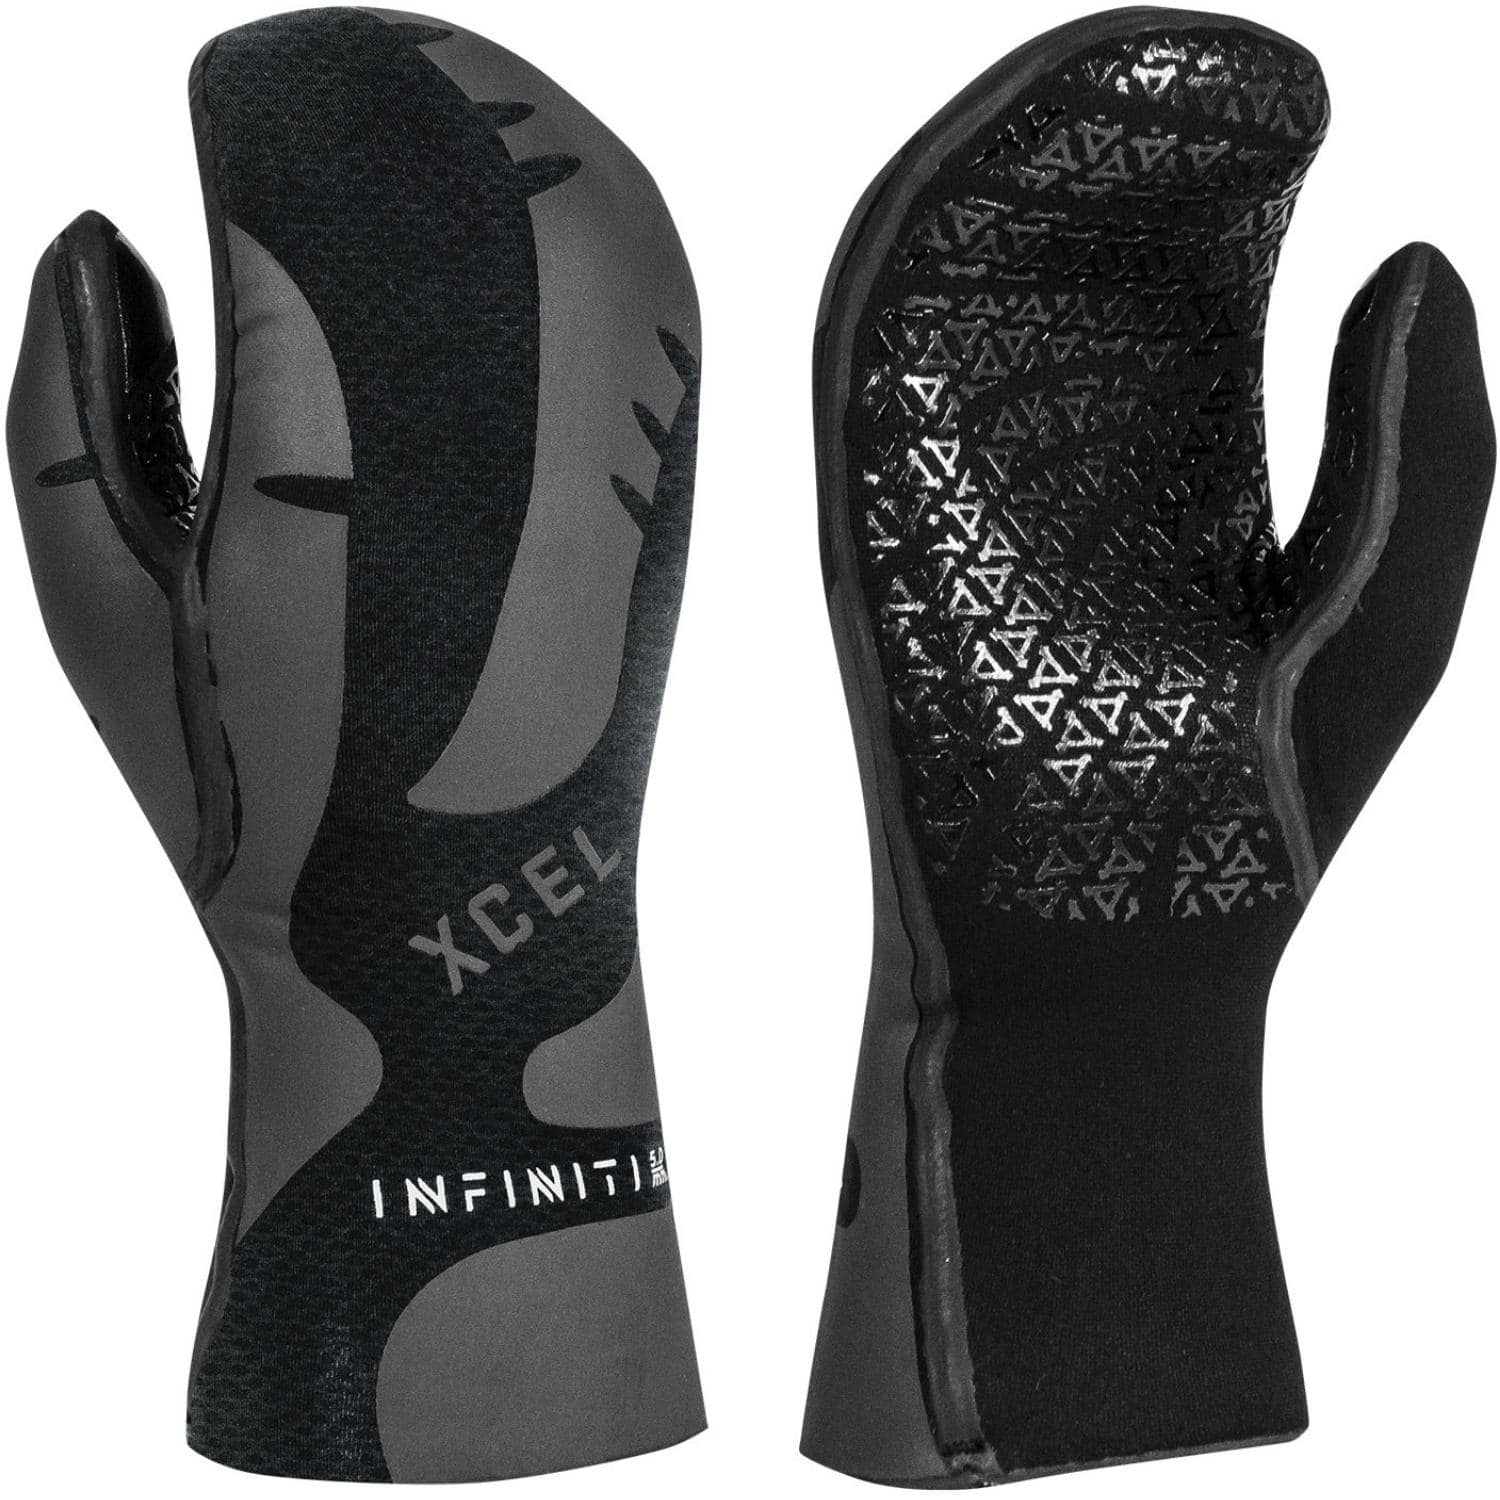 Xcel 5mm Infiniti Mitten Wetsuit Gloves 2021/22 - Black - Mitten Wetsuit Gloves by Xcel